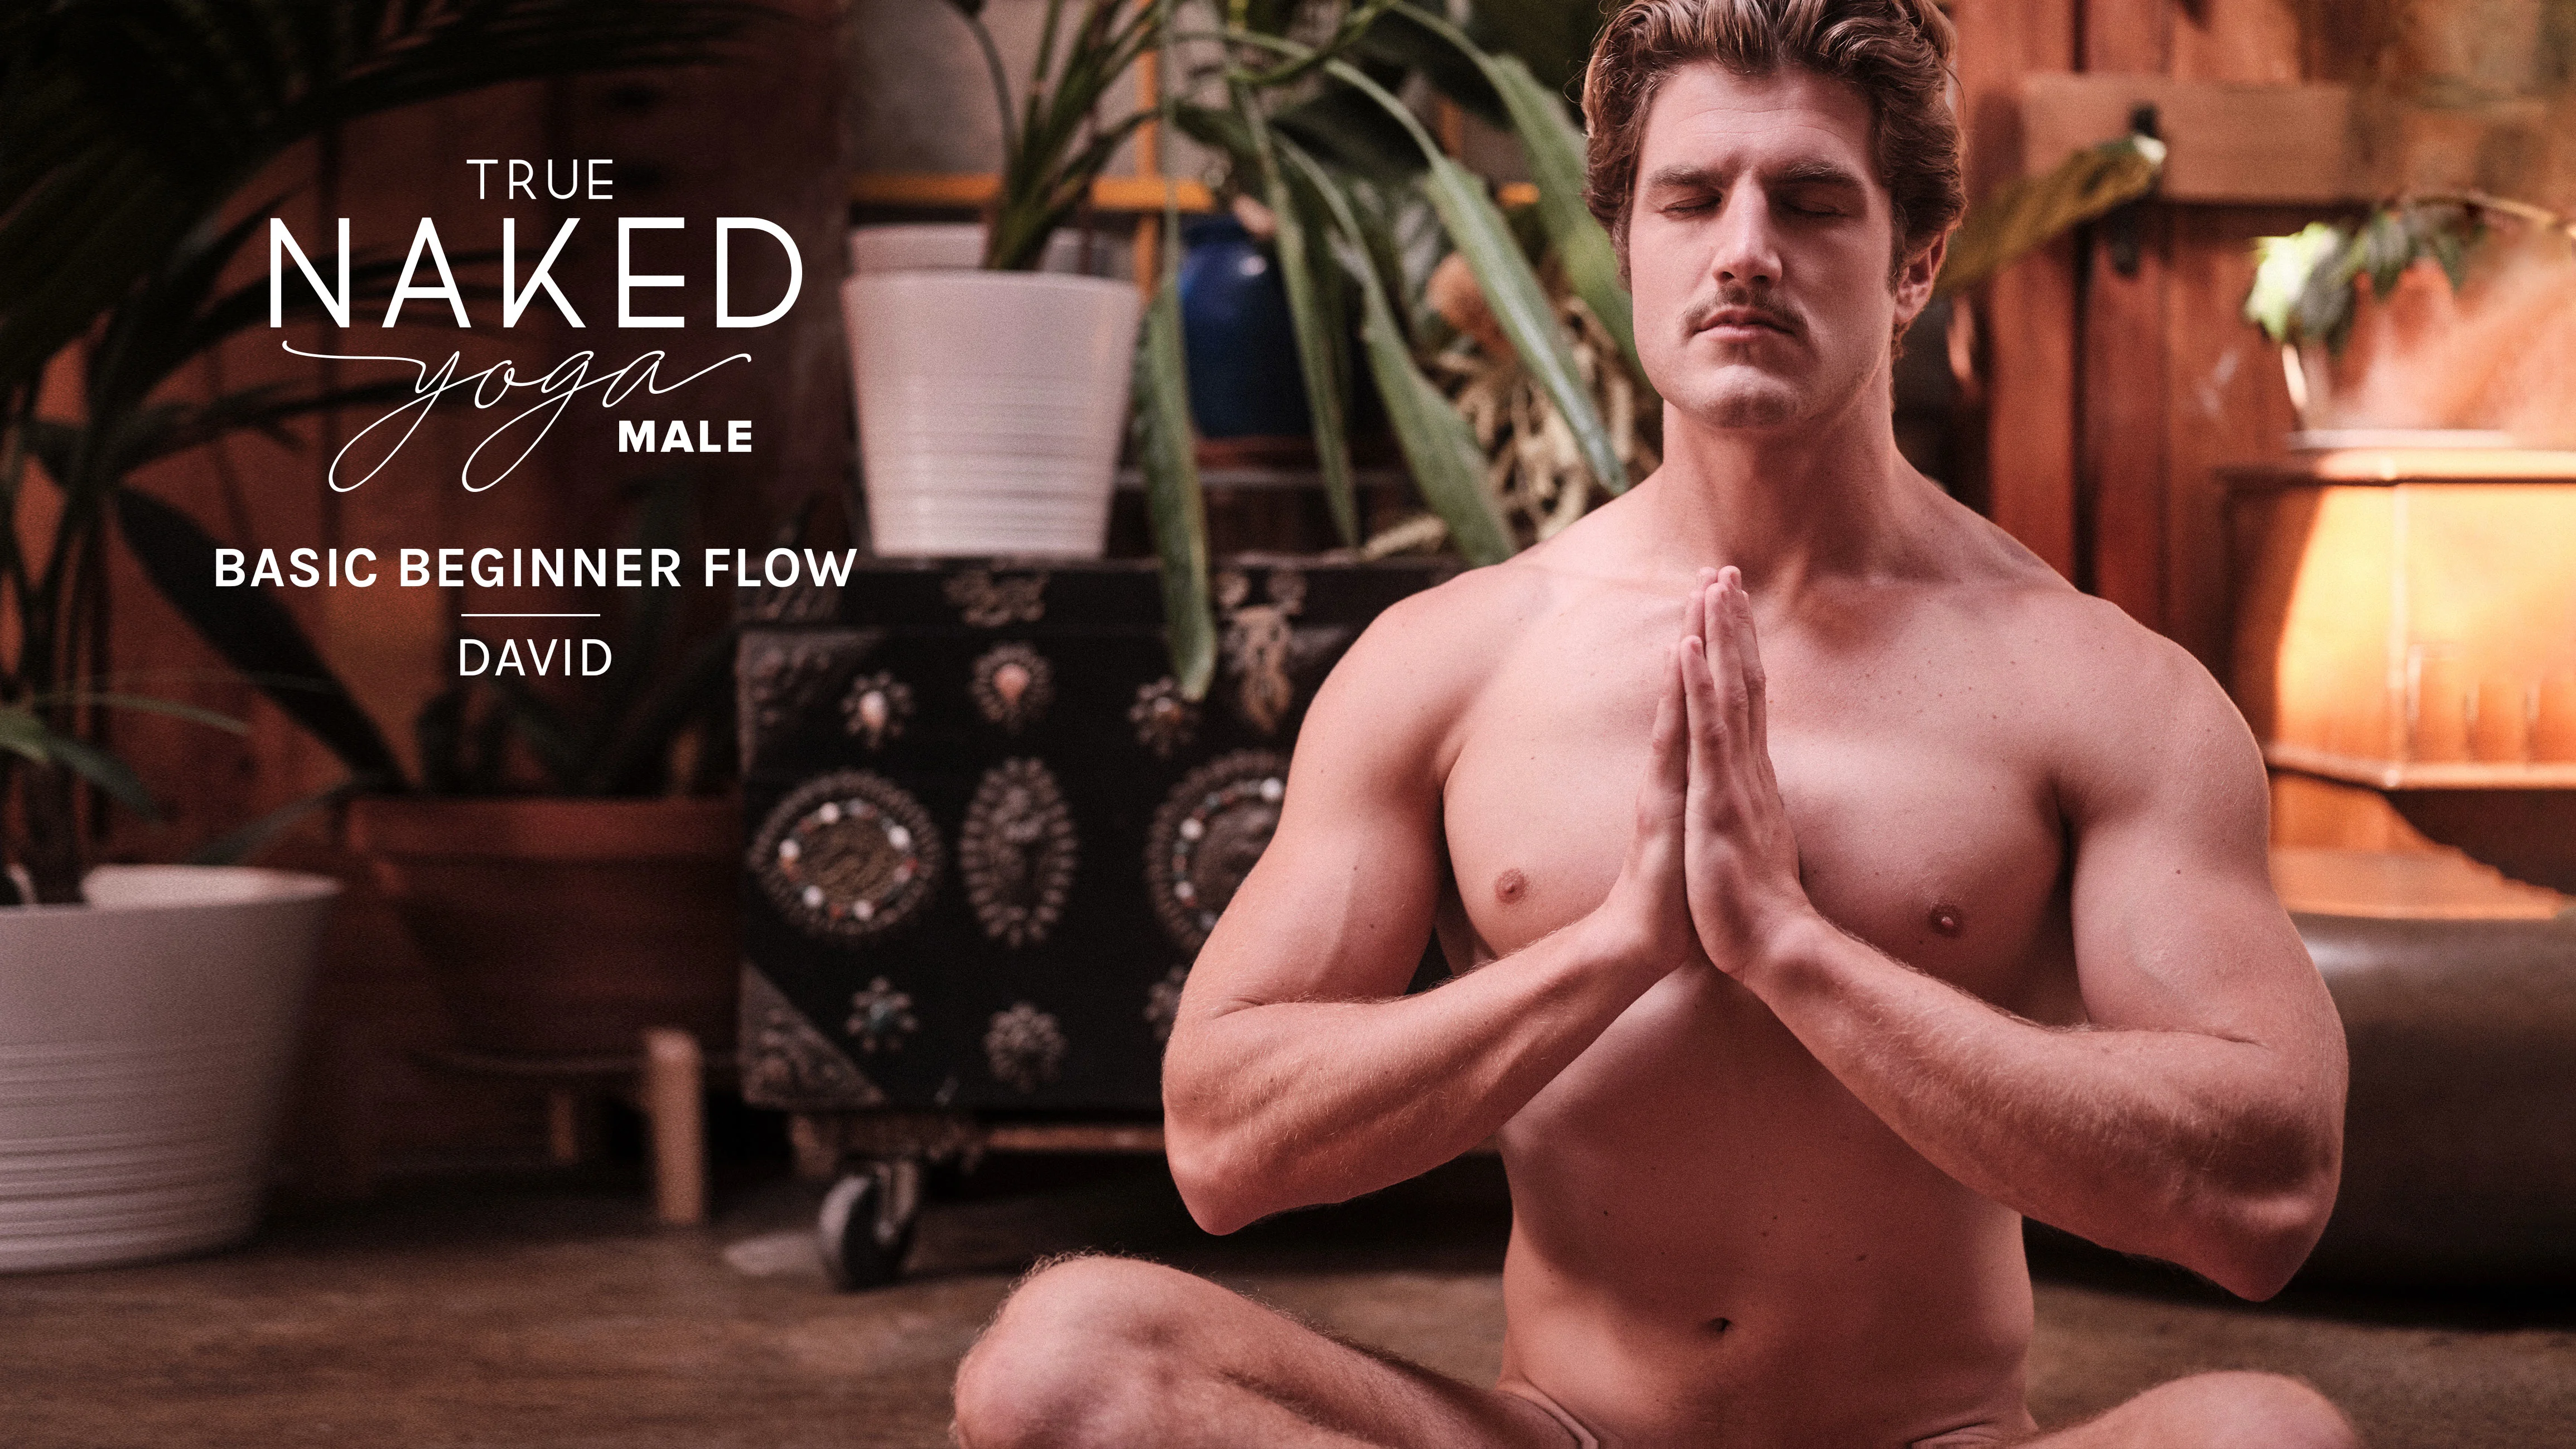 anna schmeling add photo nude male yoga videos